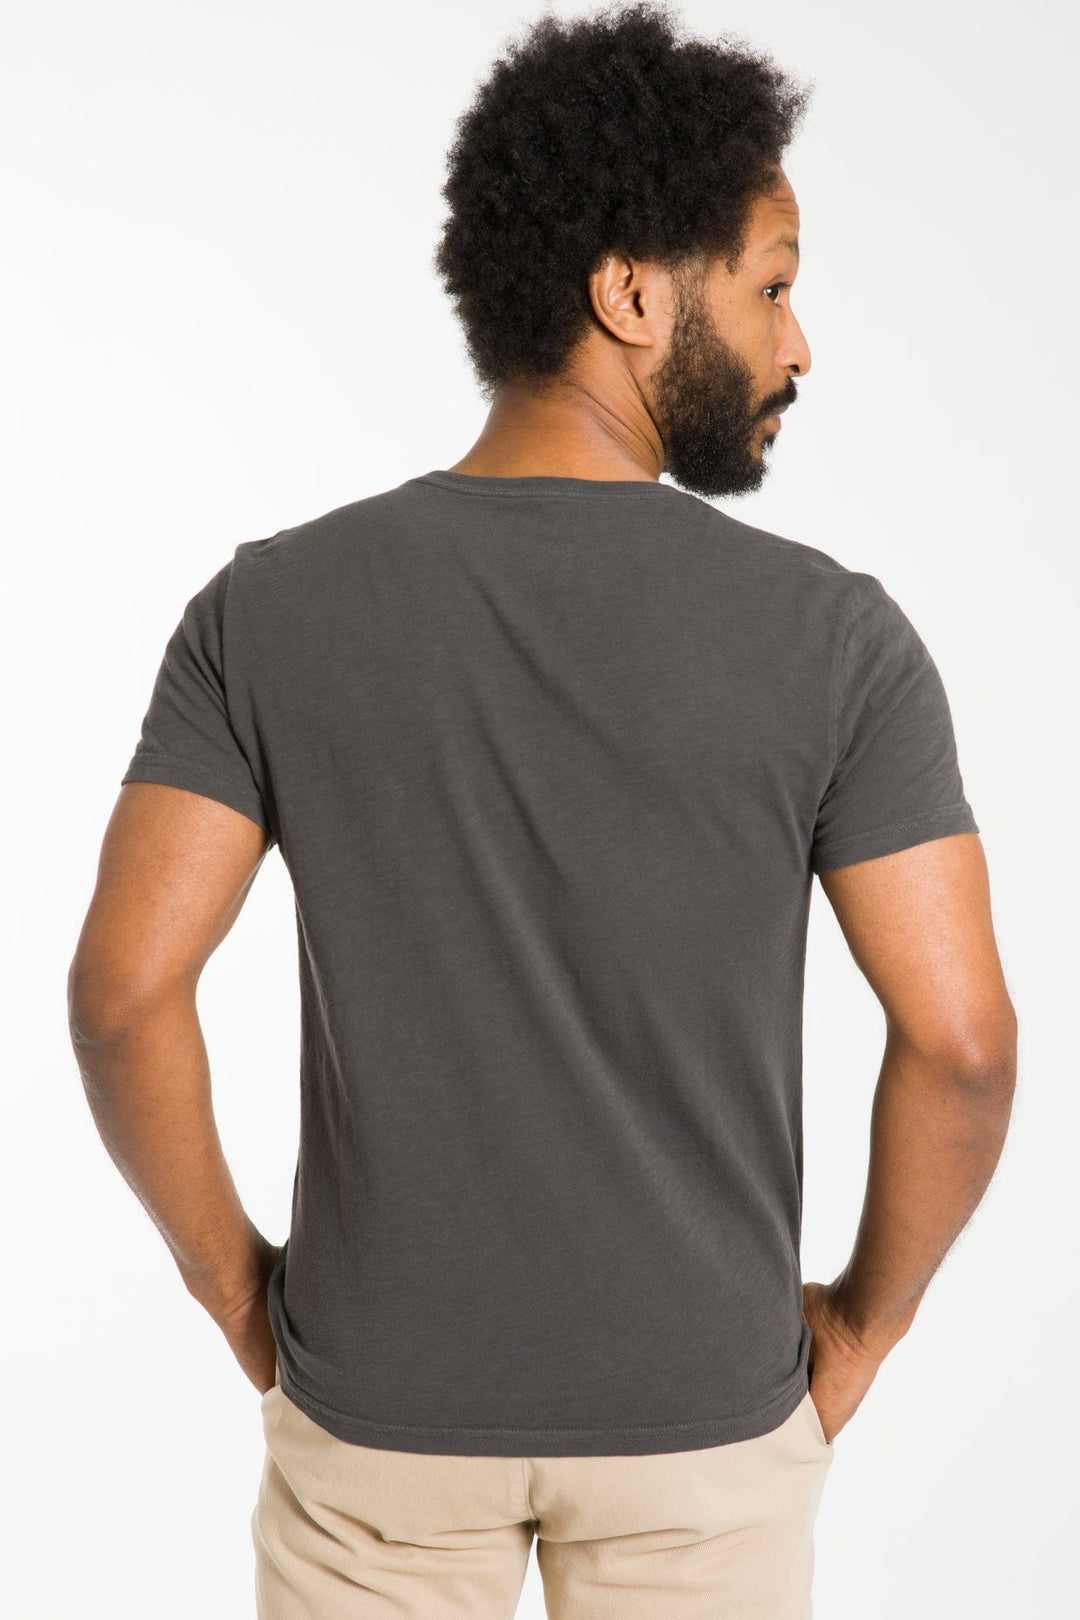 Buy Lightweight Washed Charcoal Pima Cotton Crew Neck T-Shirt for Short Men | Ash & Erie   Short Sleeve Premium Tee